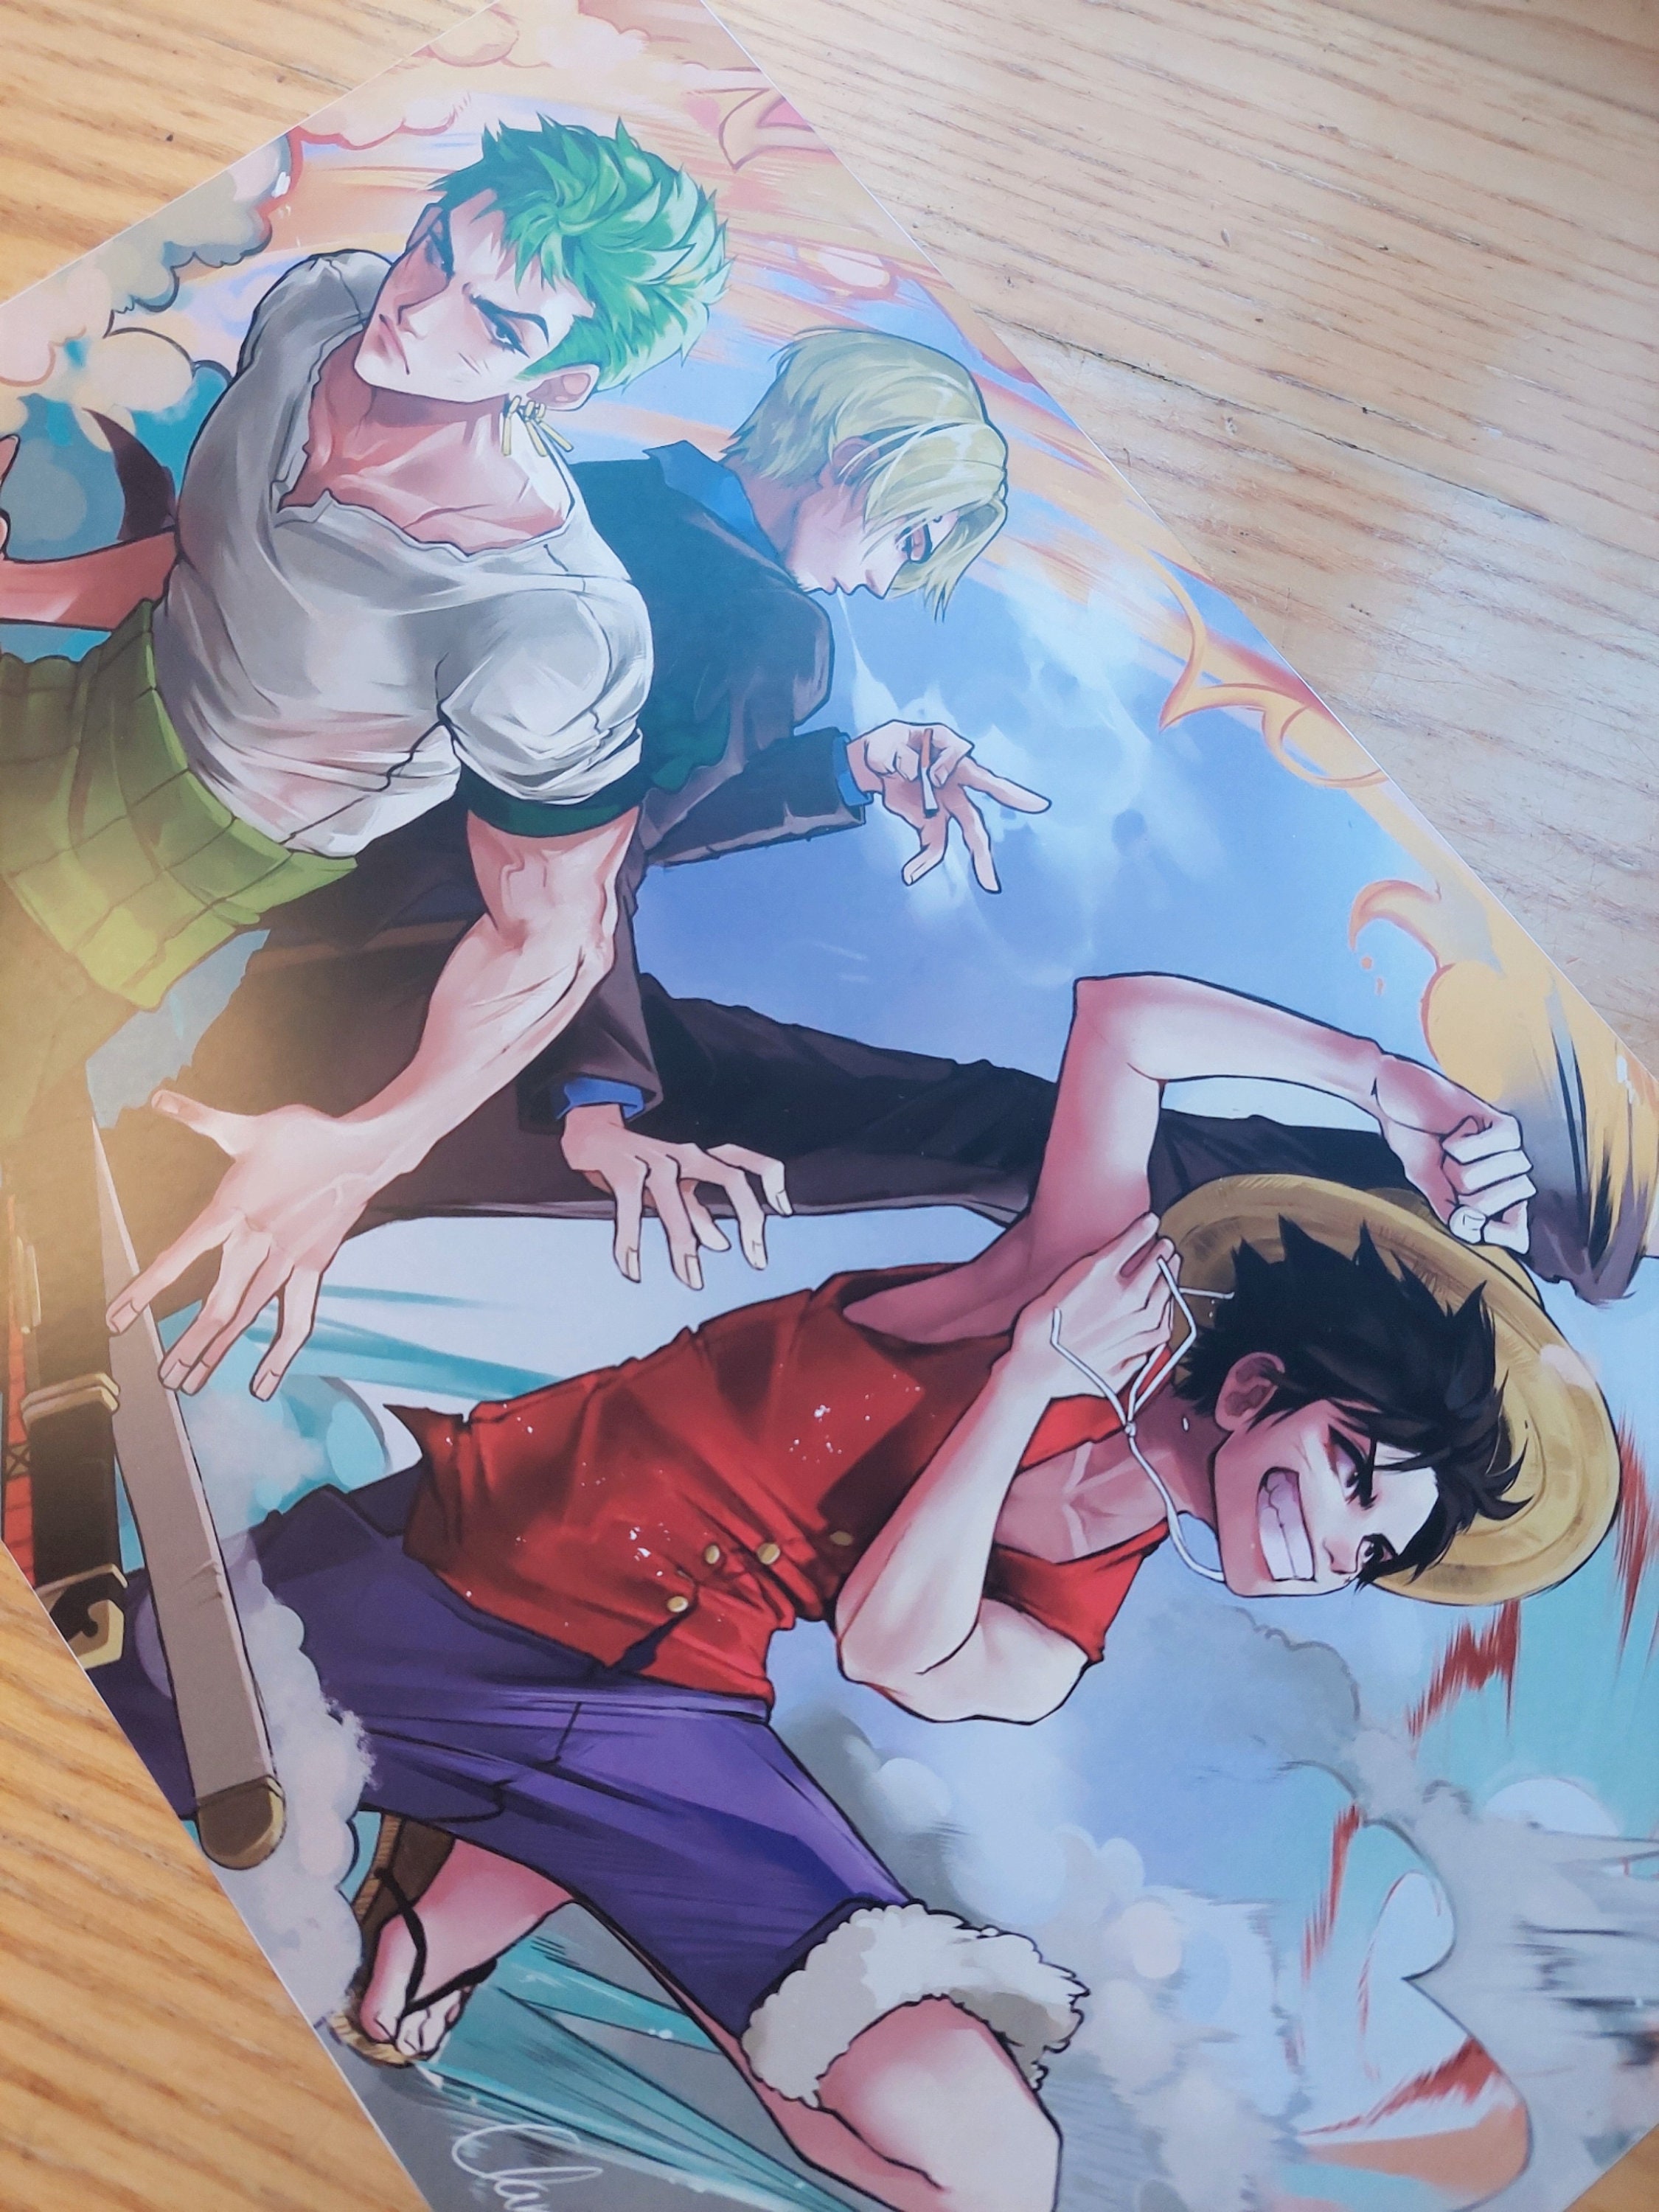 Sanji - Cadre Manga One Piece - version couleur | Poster